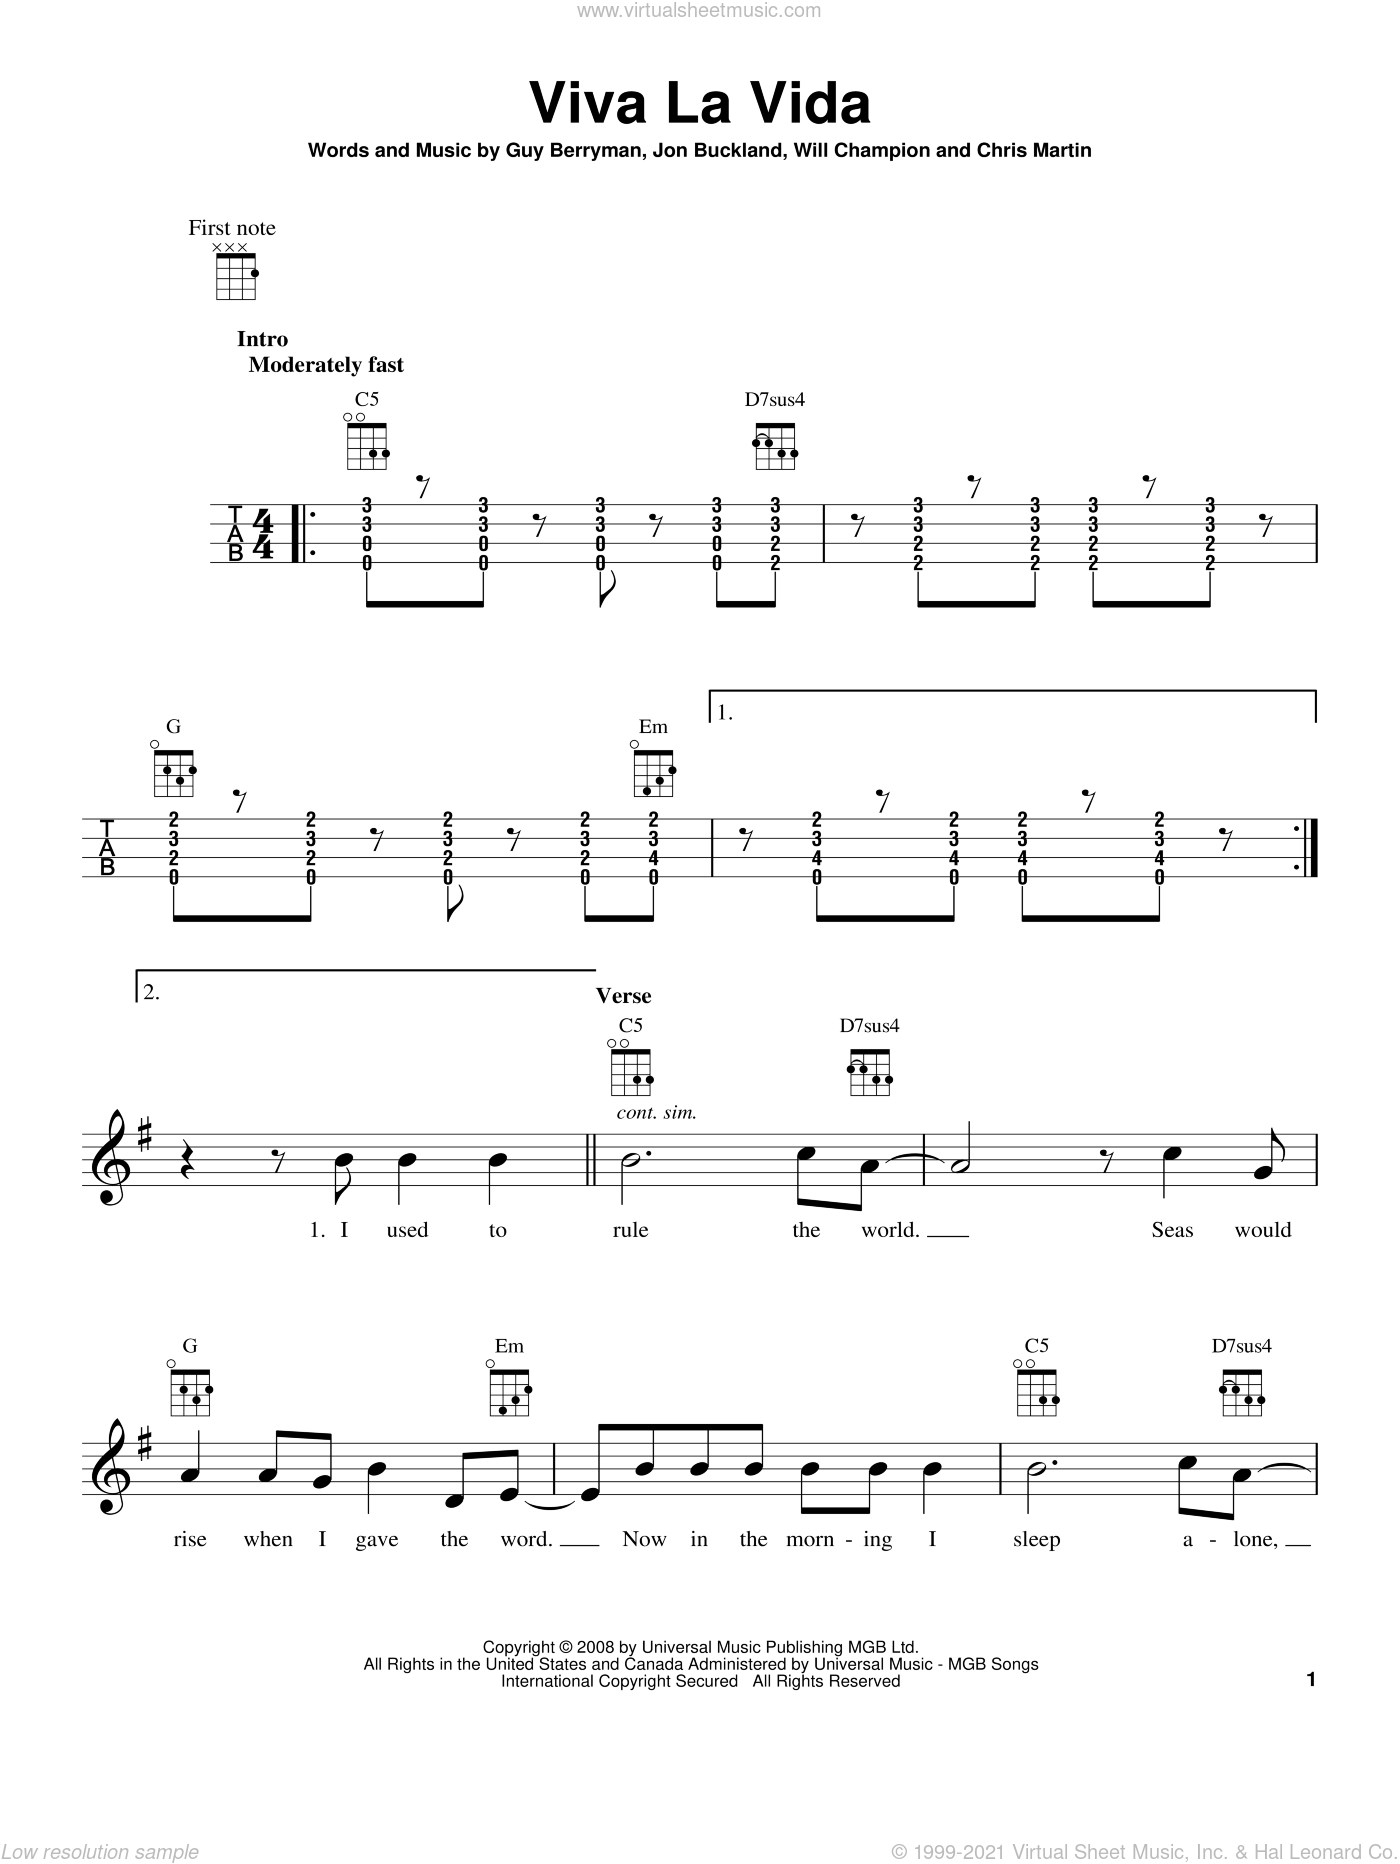 Coldplay - Viva La Vida sheet music for ukulele [PDF] v2